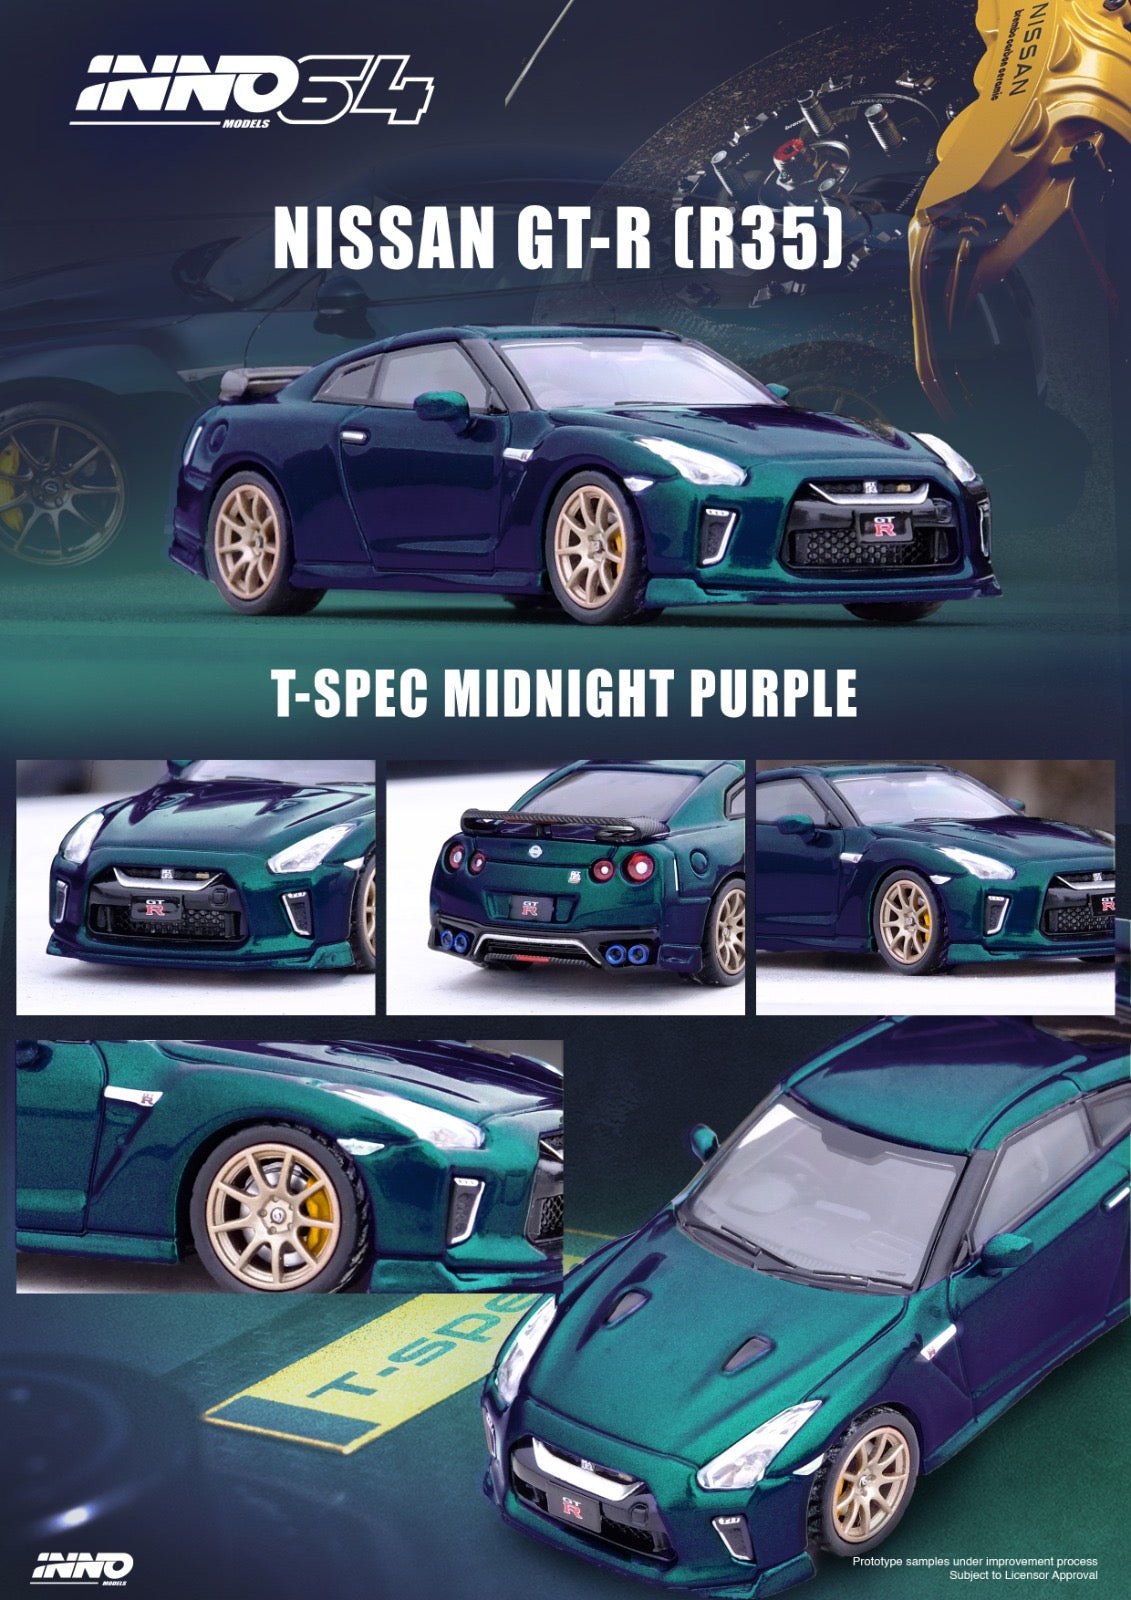 [PREORDER] INNO 64 - Nissan Skyline GT-R R35 T-SPEC Midnight Purple - MODEL CAR UKMODEL CAR#INNO64##TARMAC##diecast_model#